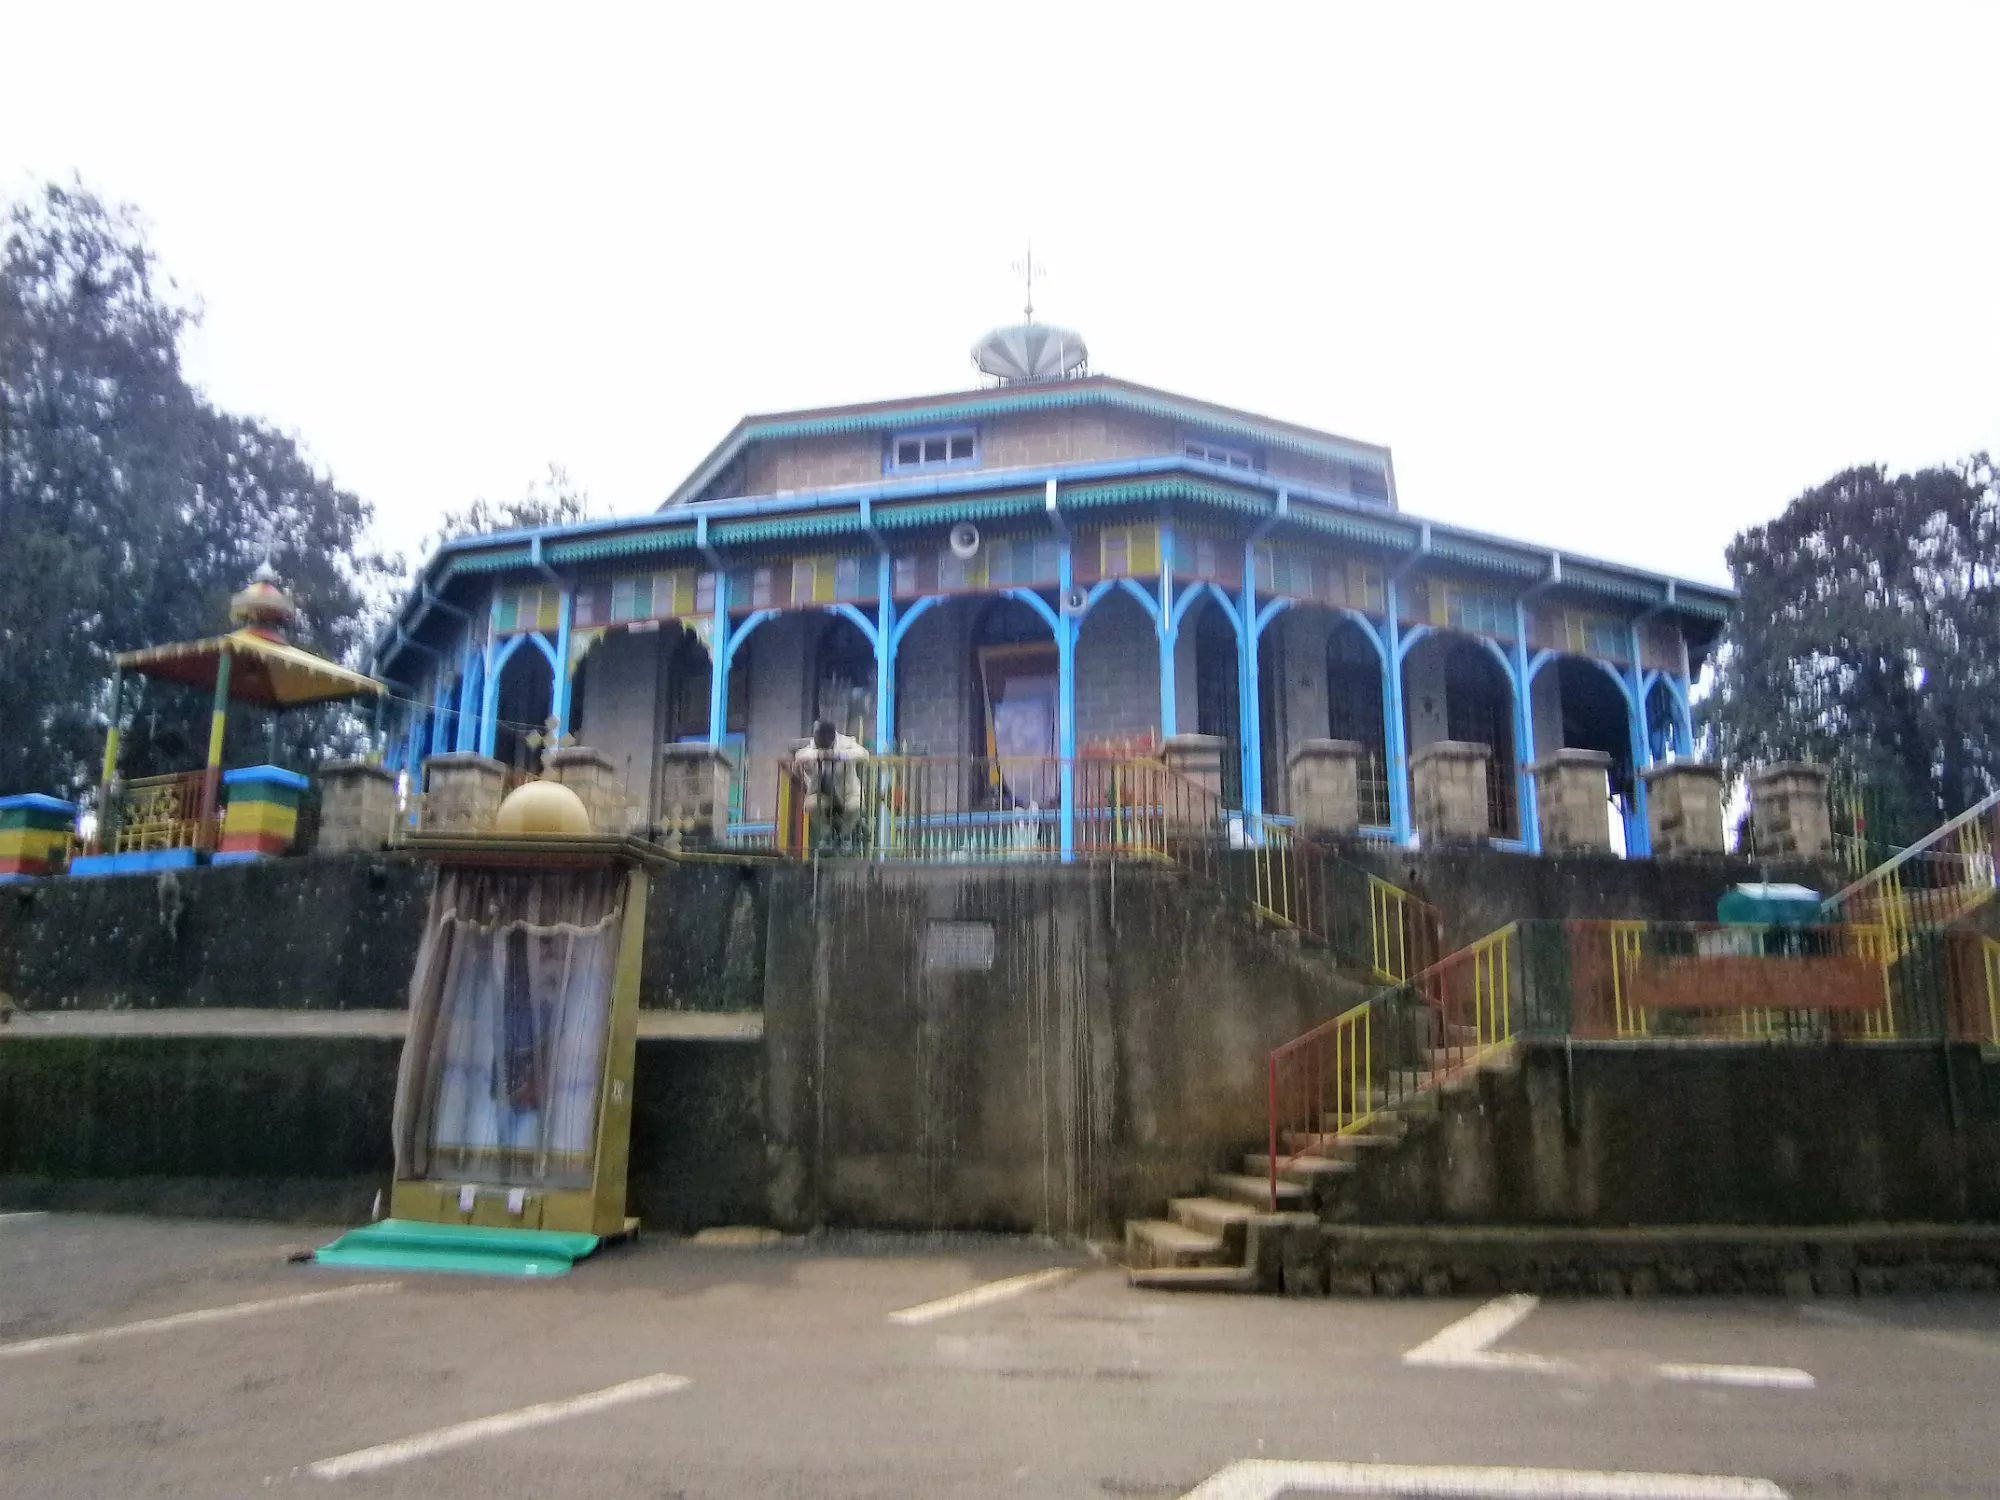 Menelik palace